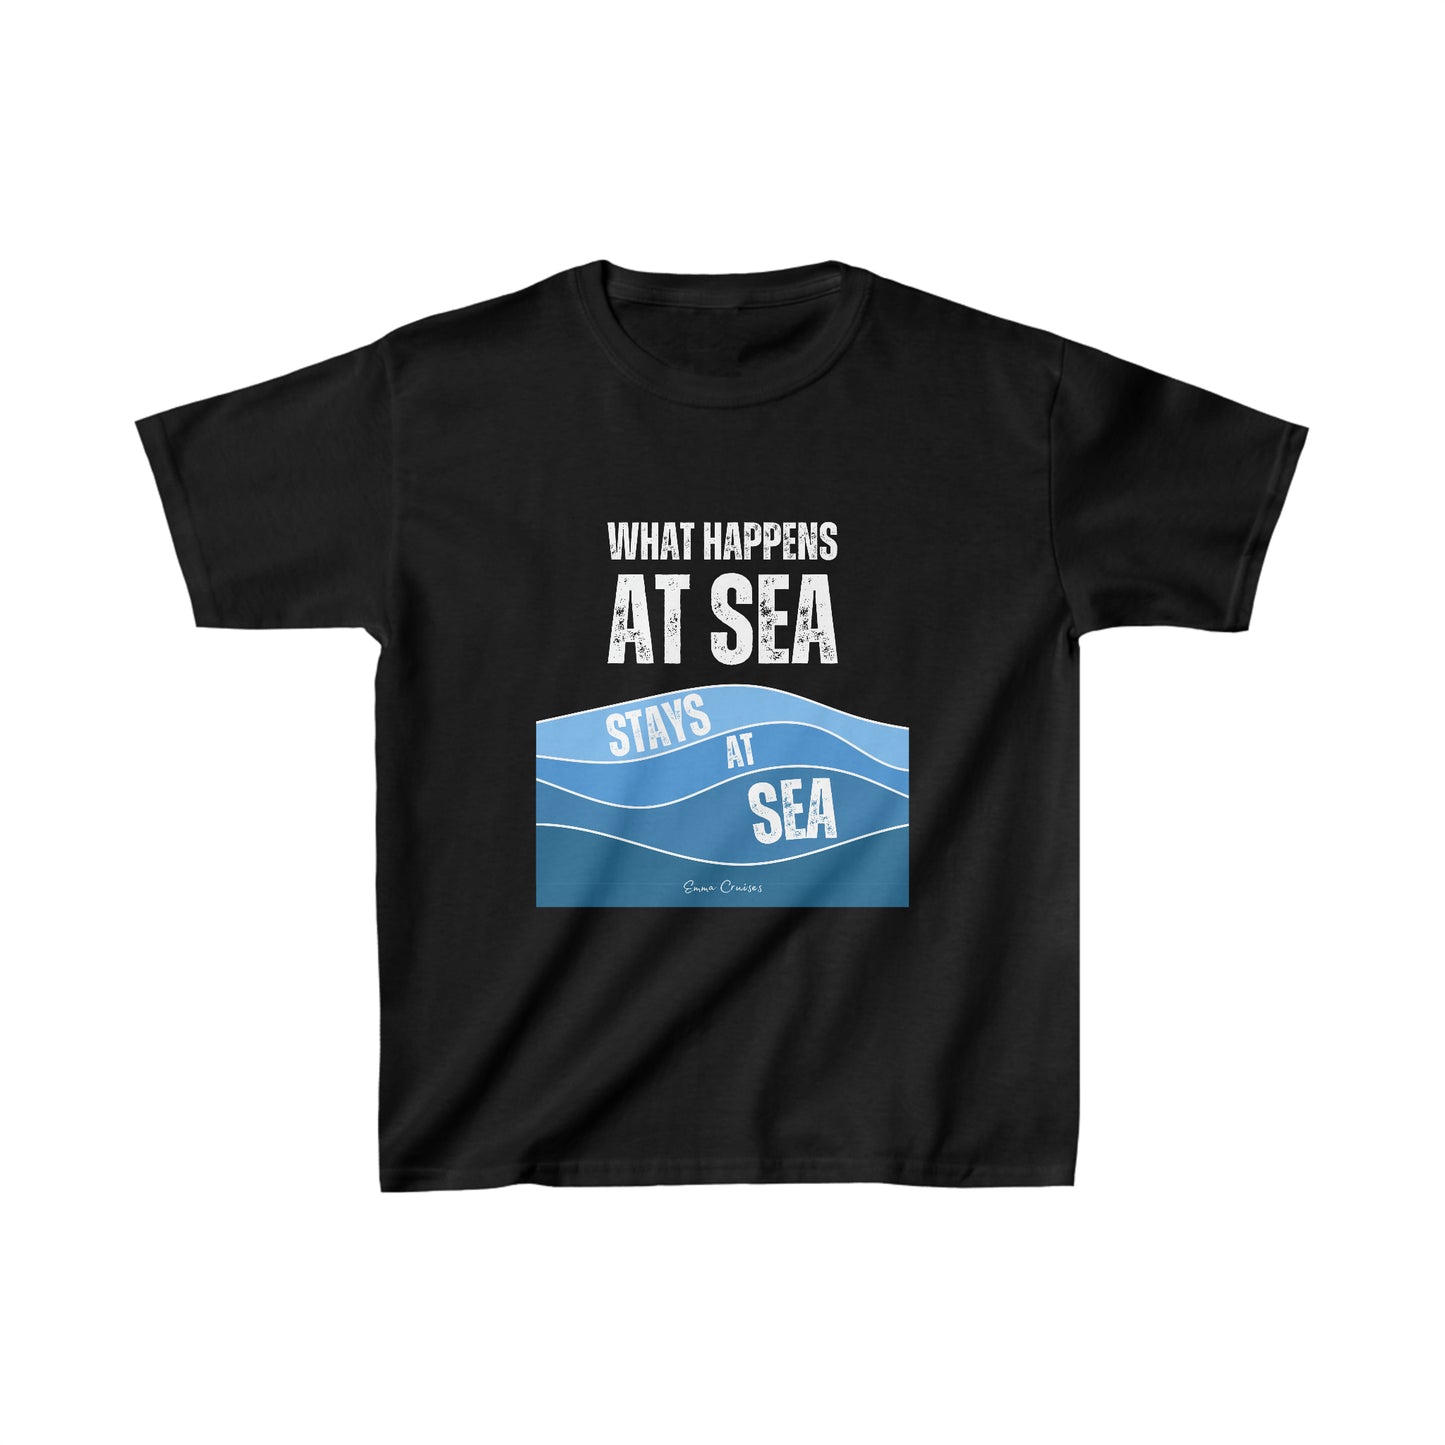 What Happens at Sea - Kids UNISEX T-Shirt